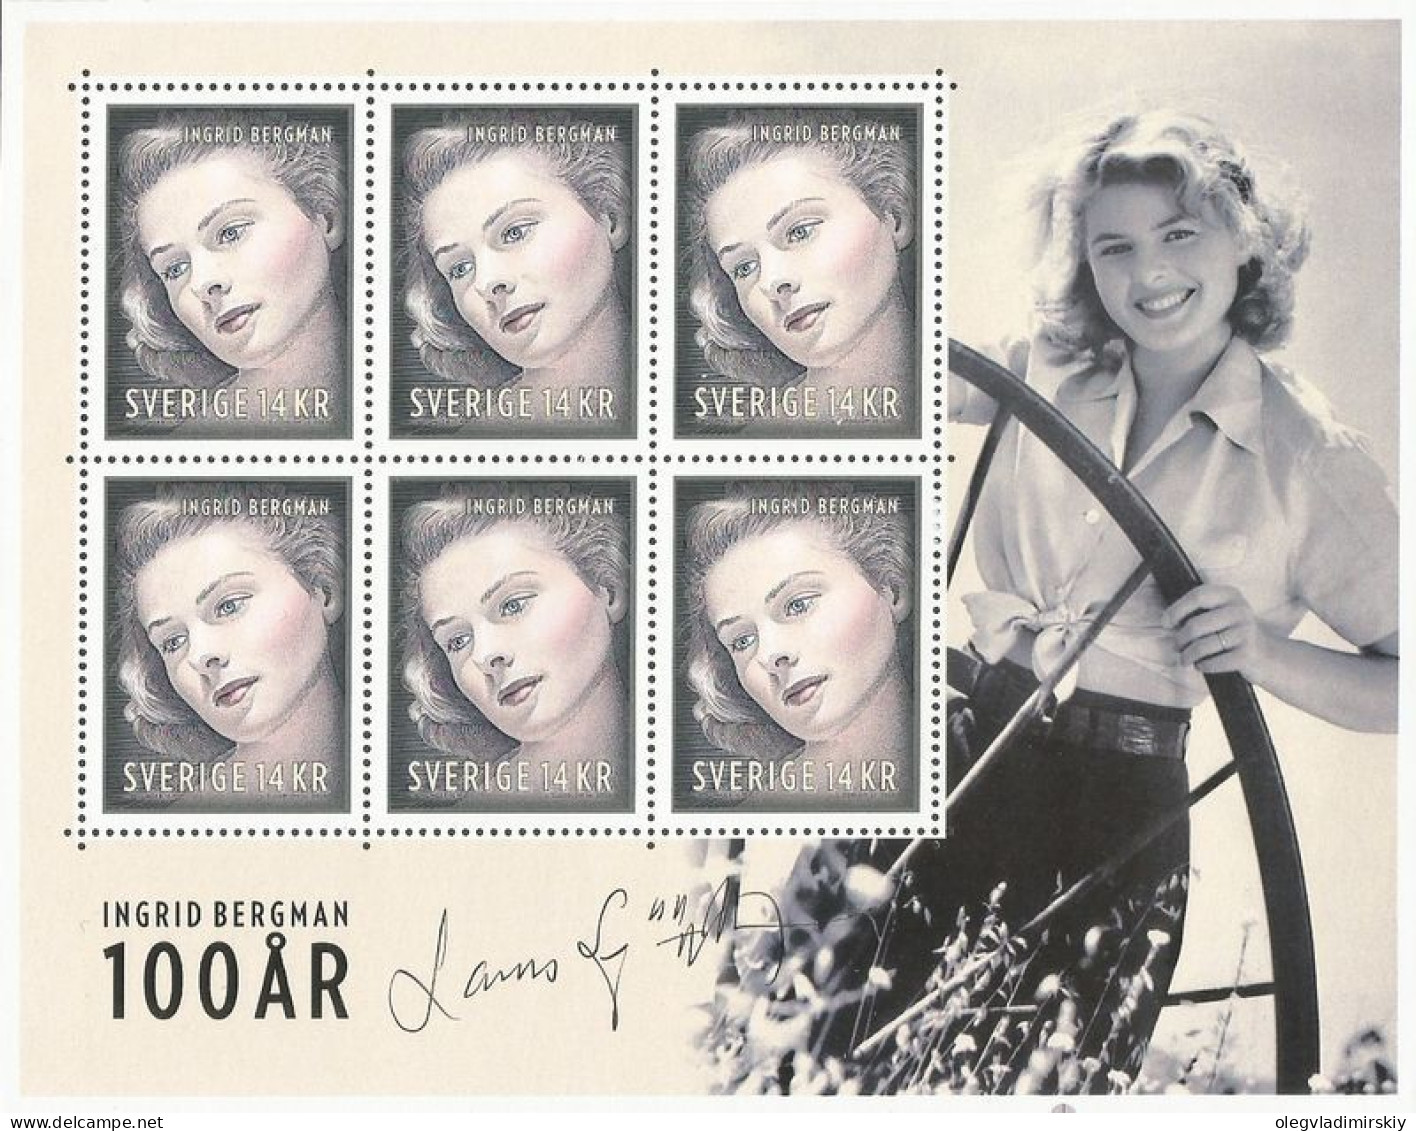 Sweden Schweden Suède 2015 Ingrid Bergman 100 Ann Joint Issue With USA Special Limited Edtion Sheetlet MNH - Blocs-feuillets